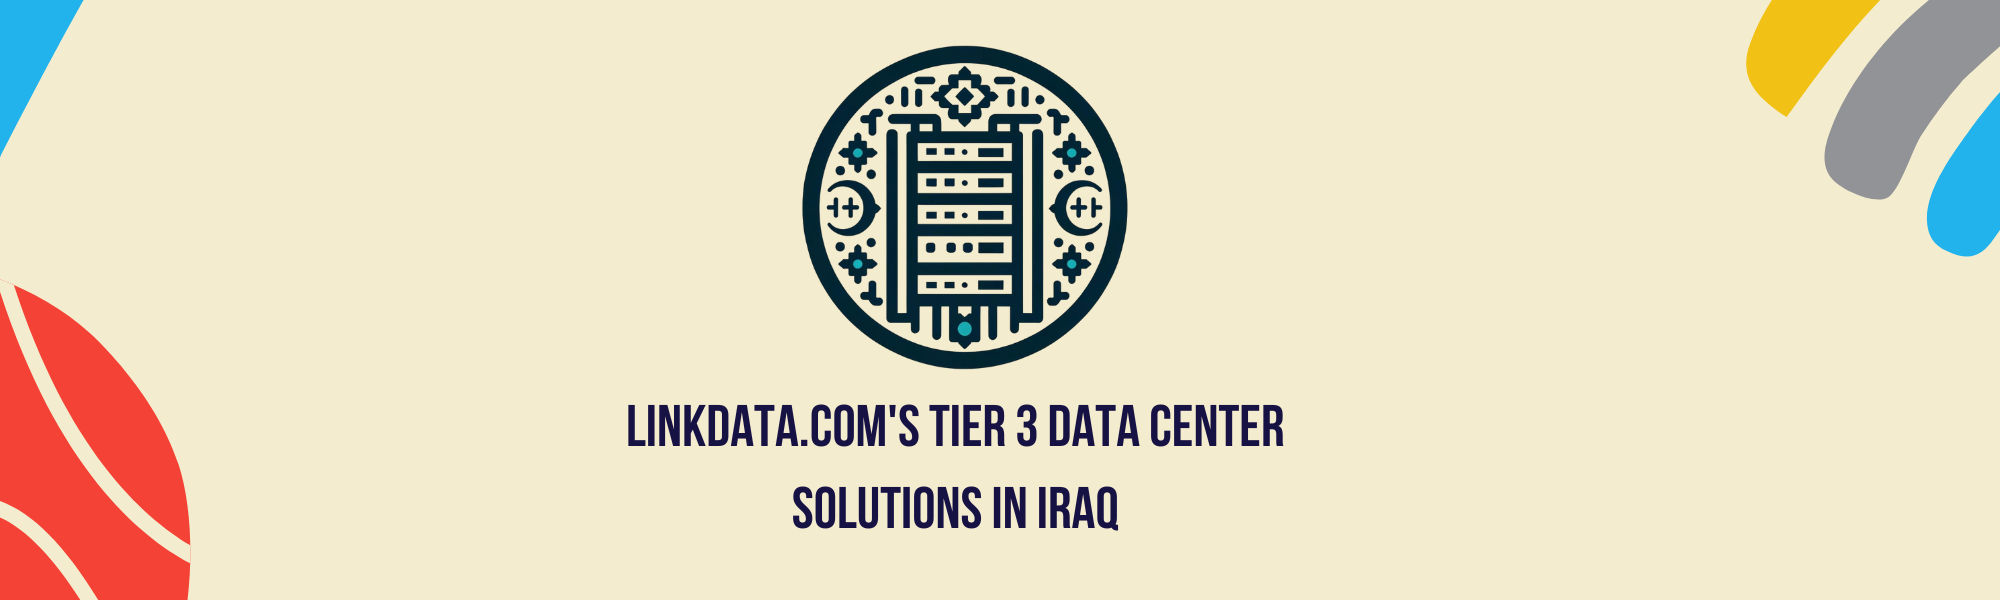 Linkdata.com’s Tier 3 Data Center in Iraq